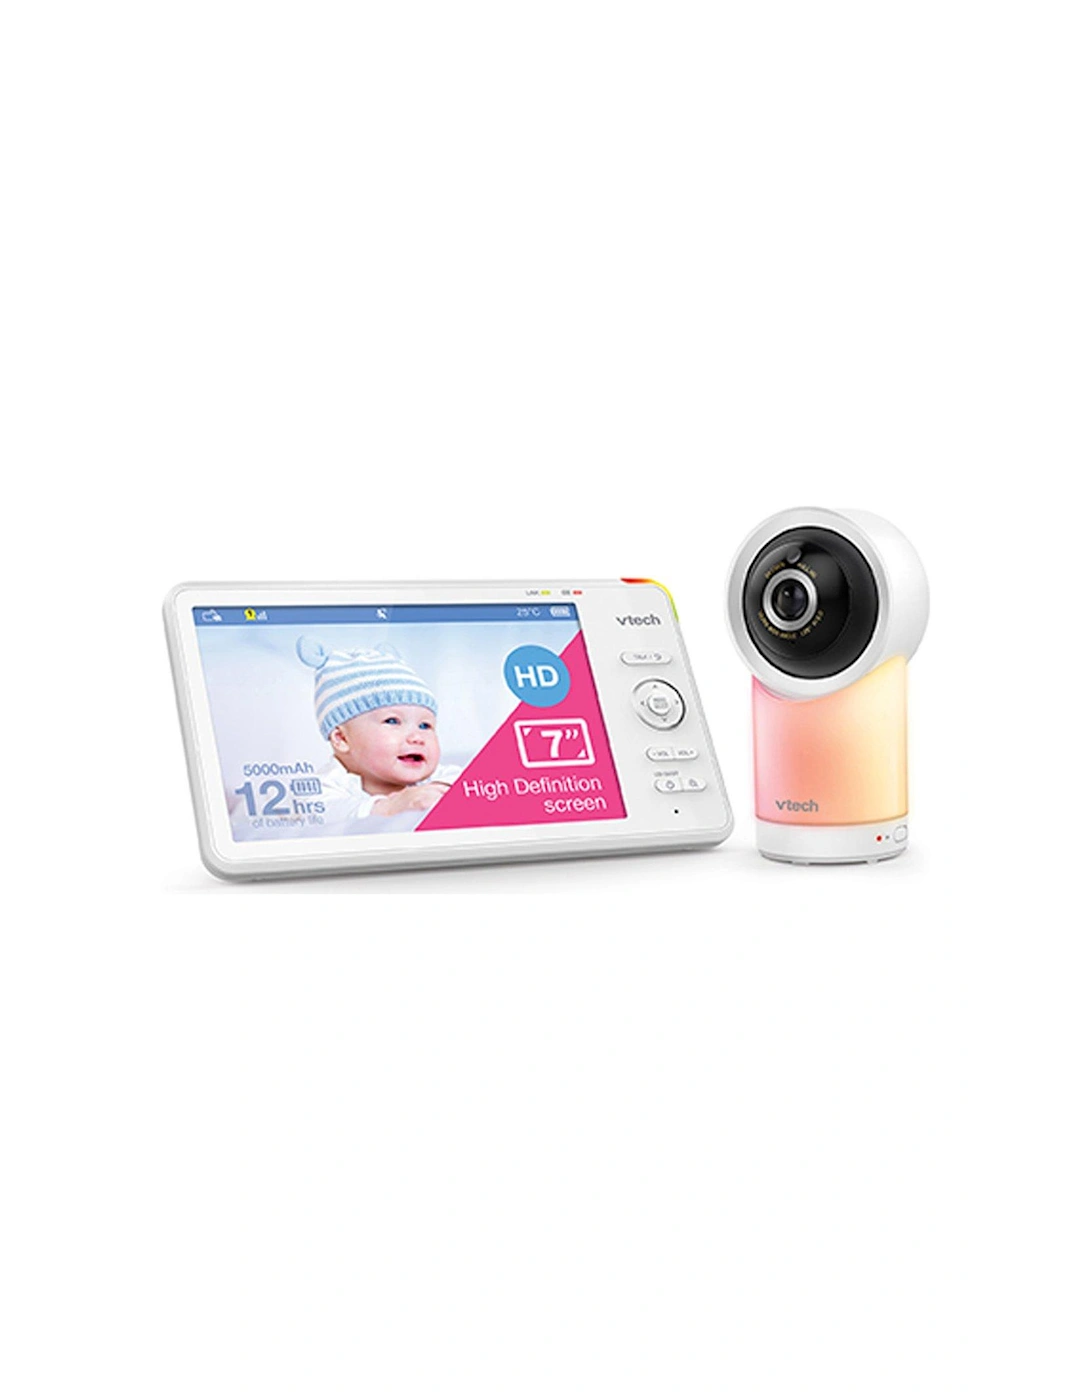 RM7766HD 7" Smart Wi-Fi 1080p Pan and Tilt Baby Monitor